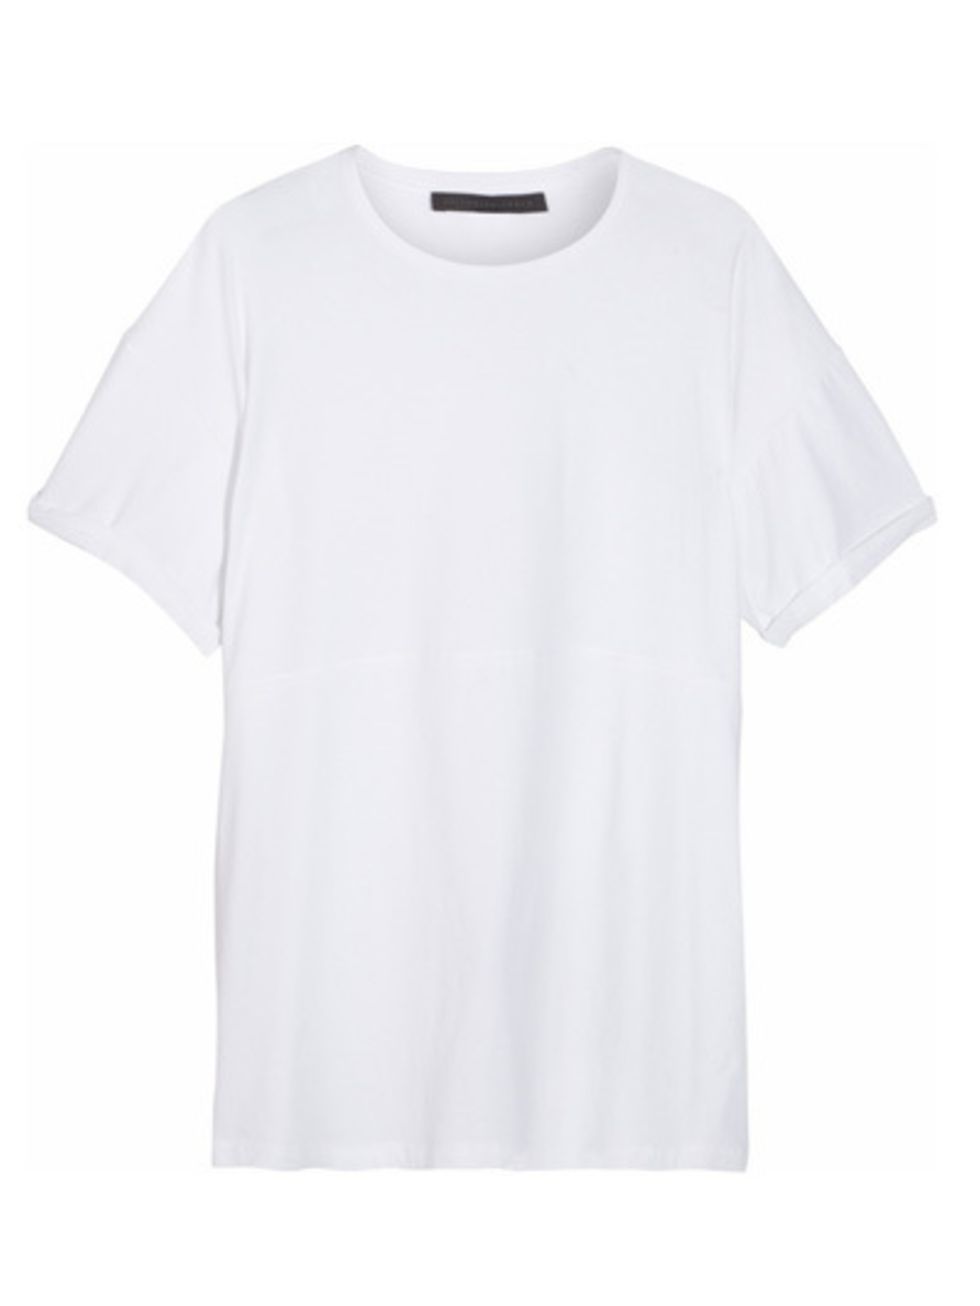 Product, Sleeve, White, Grey, Aqua, Active shirt, Top, Graphics, 